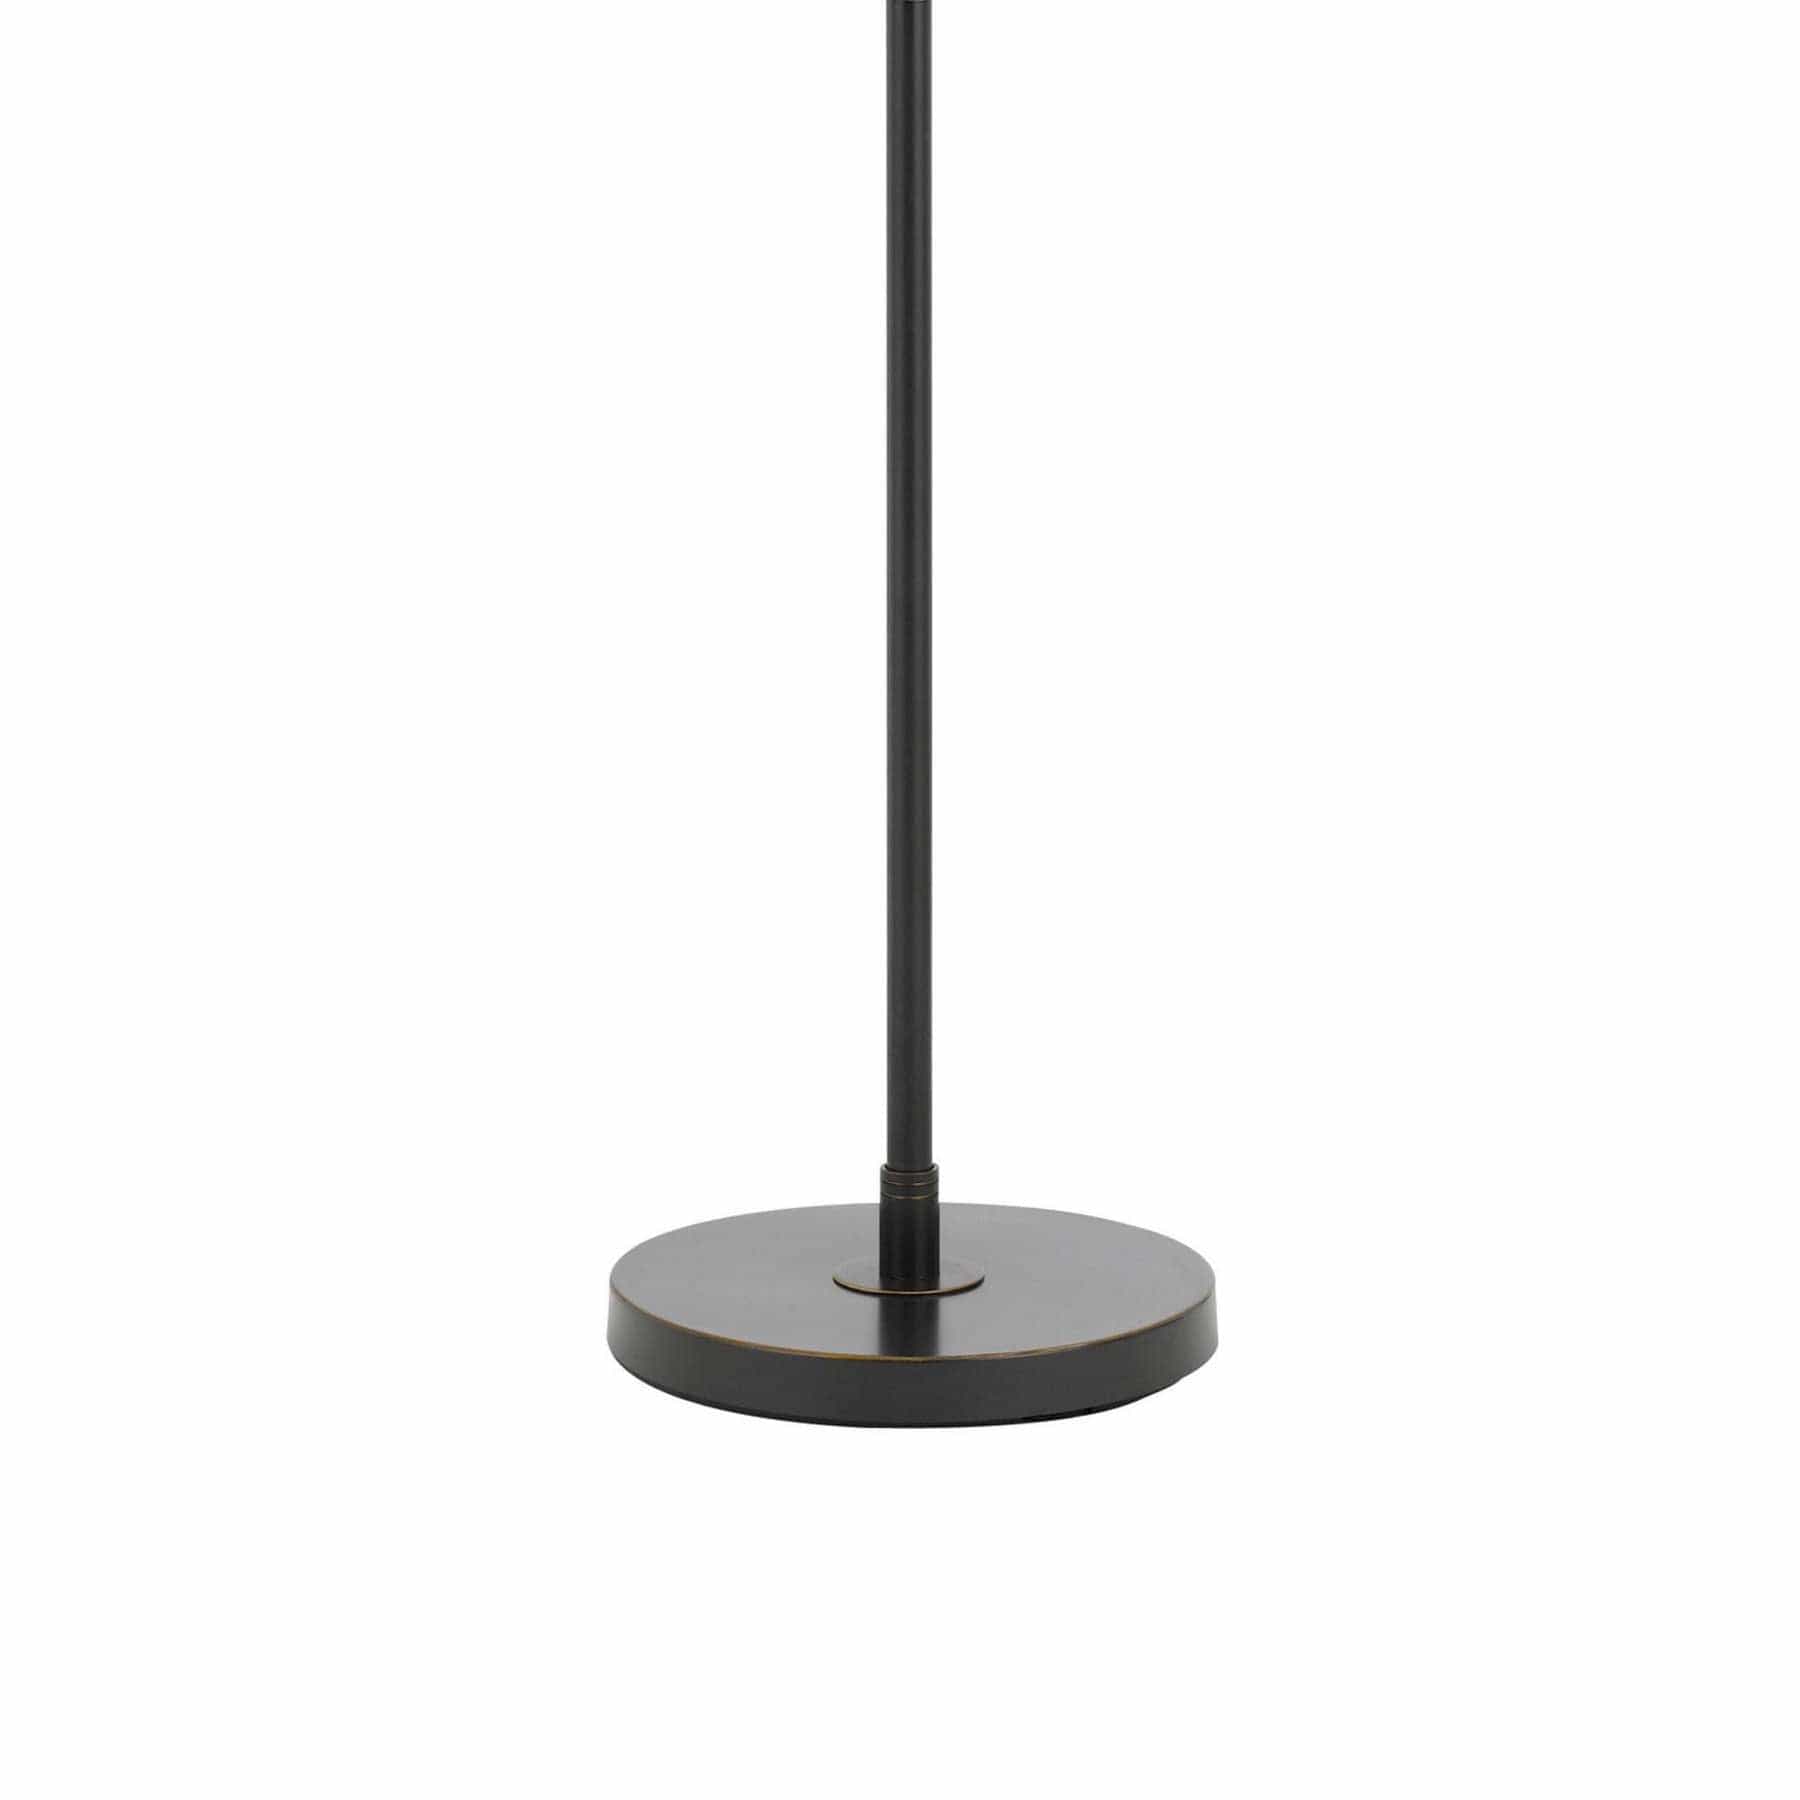 Benzara Metal Floor Lamp With Swing Arm And Tubular Stand, Beige And Black By Benzara Floor Lamps BM224913